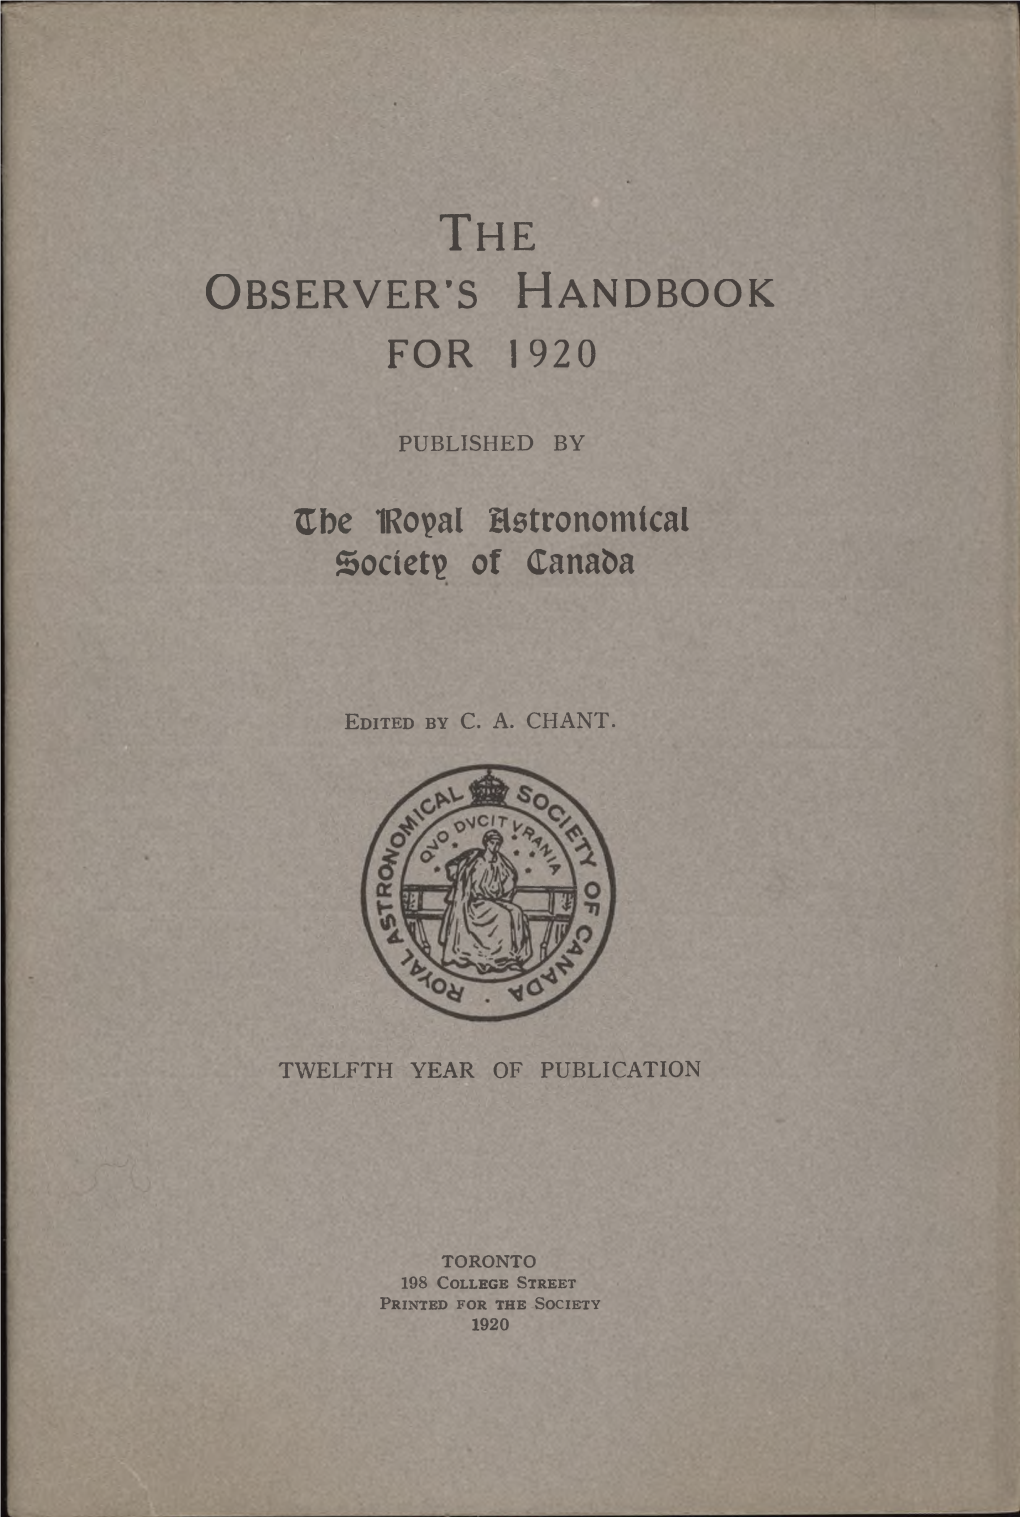 The Observer's Handbook for 1920